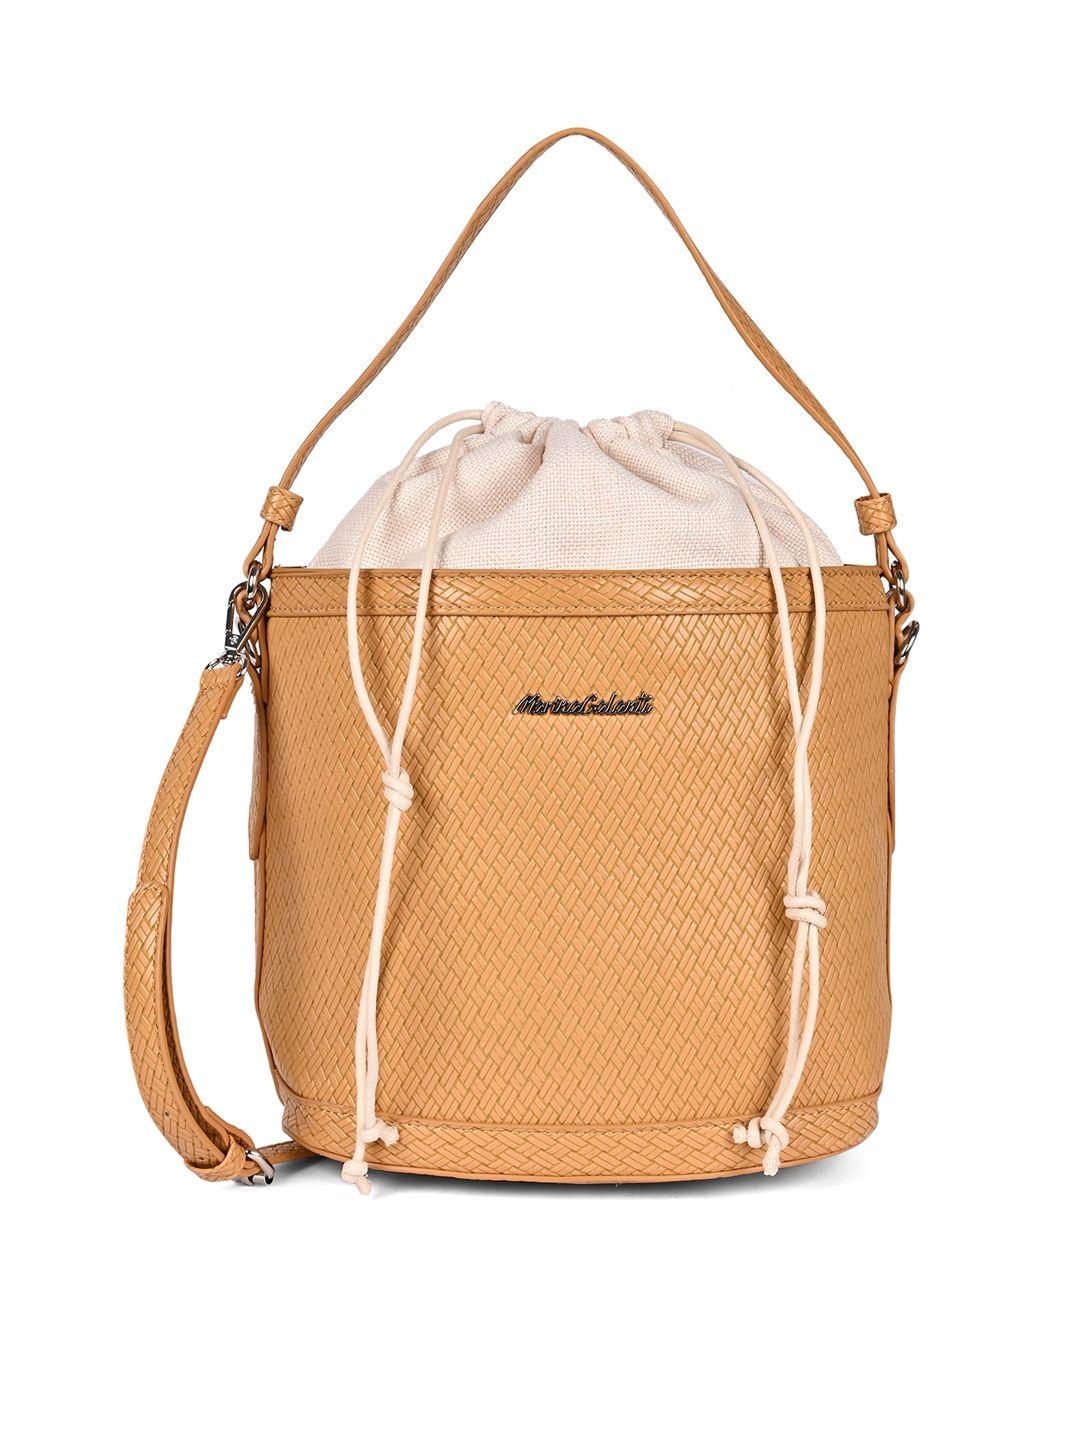 marina galanti brown  structured handheld bag